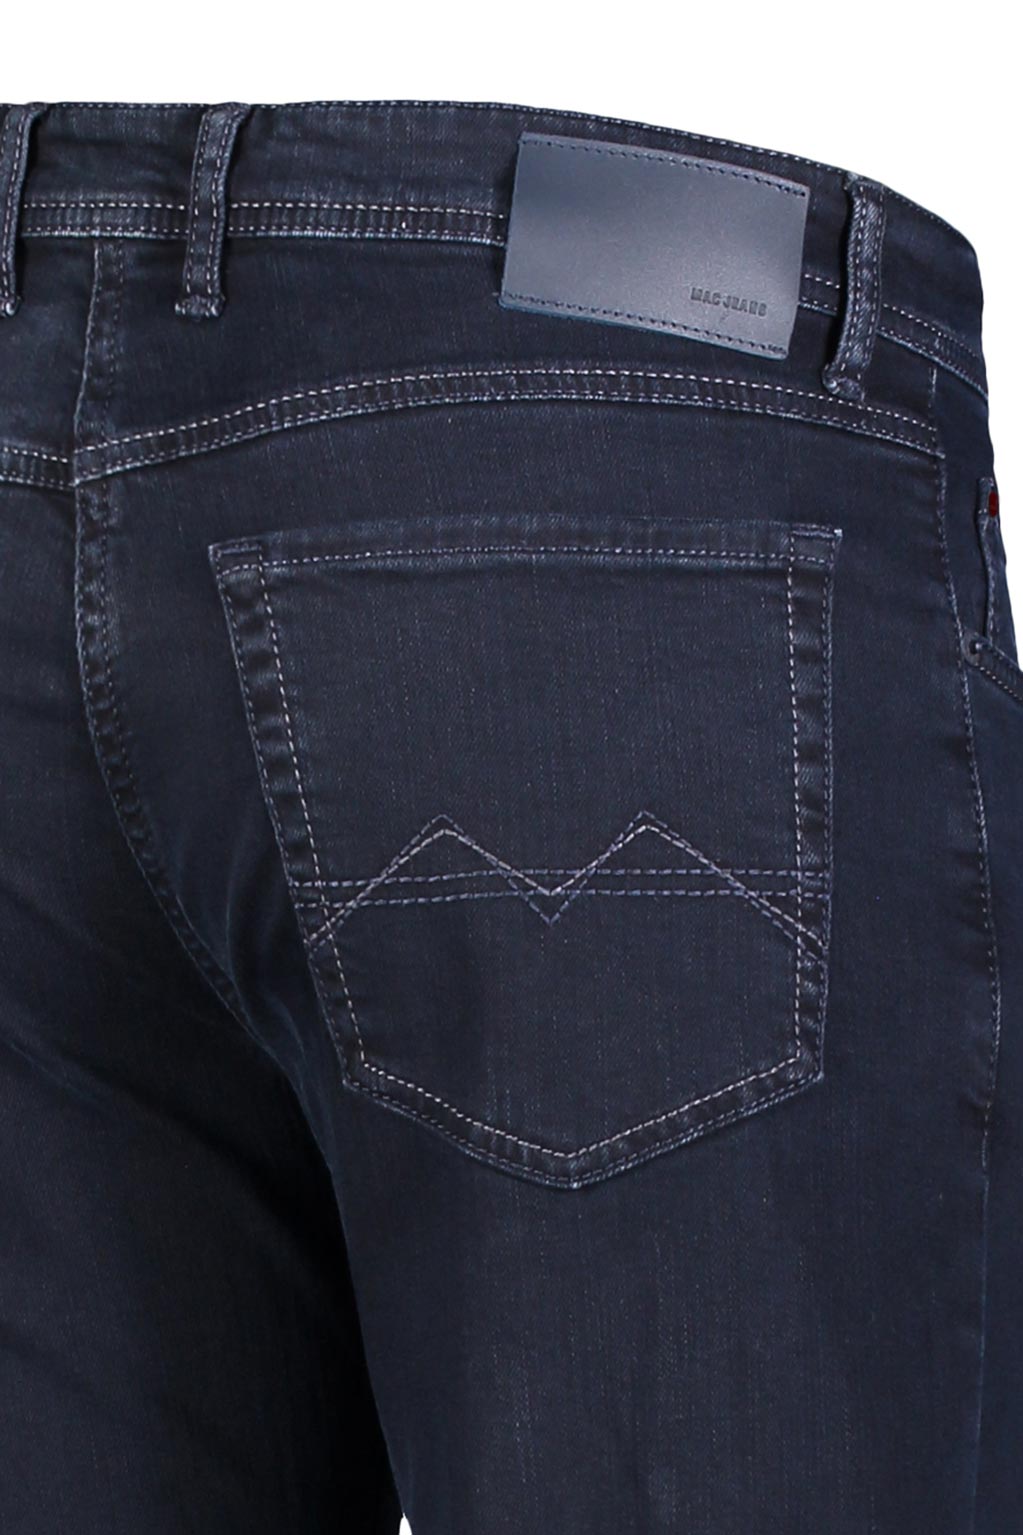 Mac Navy Fabric Jean